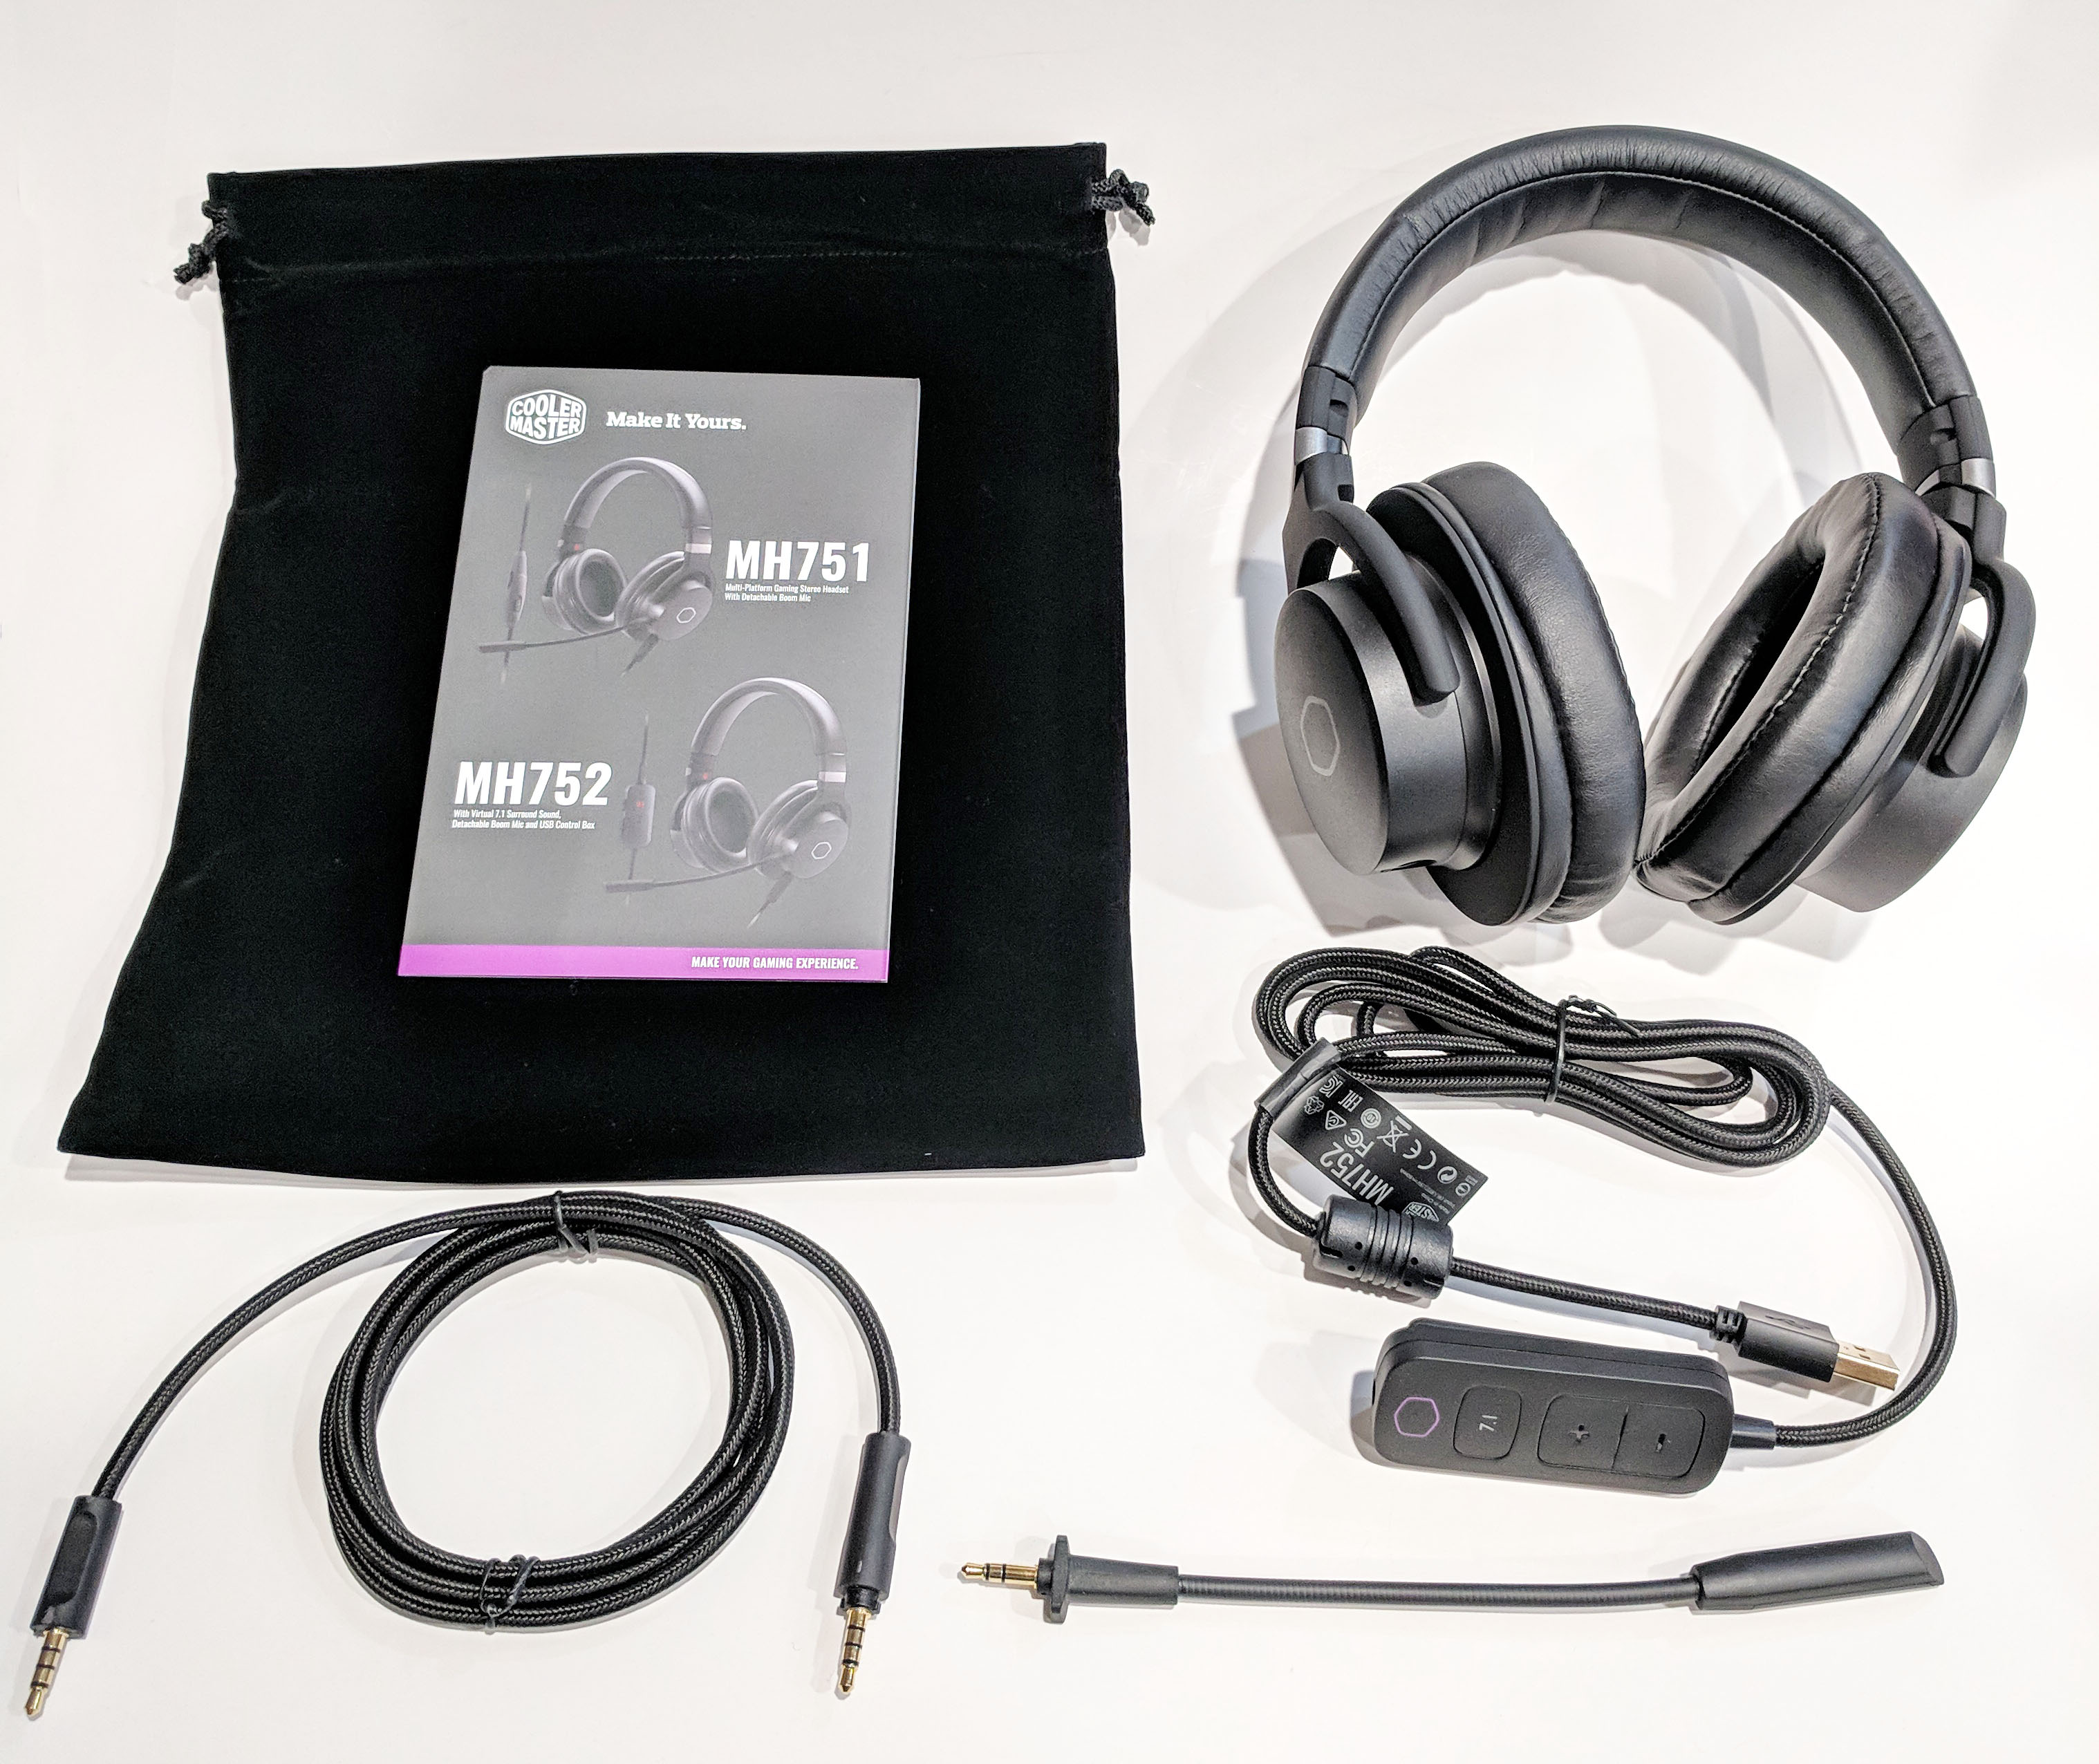 cooler-master-mh752-gaming-headset-09.jpg